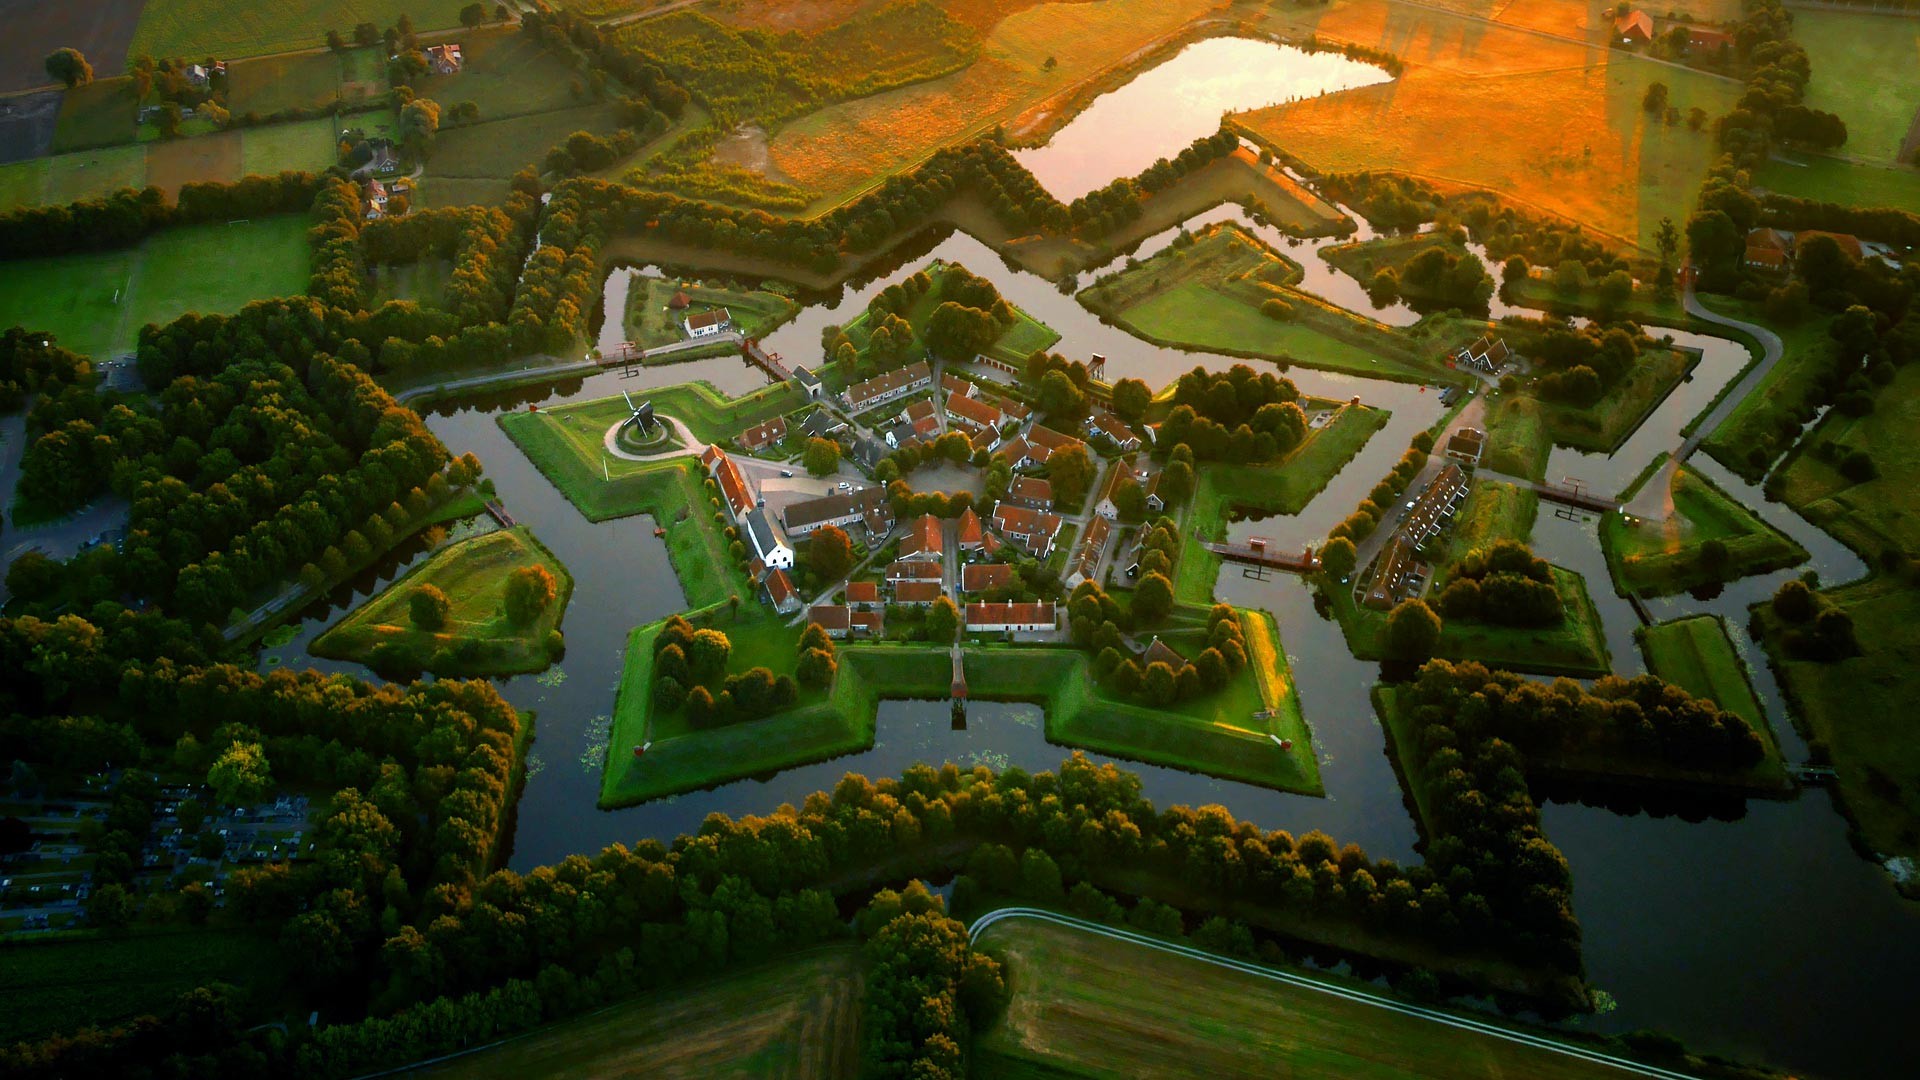 General 1920x1080 Netherlands landscape nature trees village sunset Europe aerial view field Bourtange Groningen